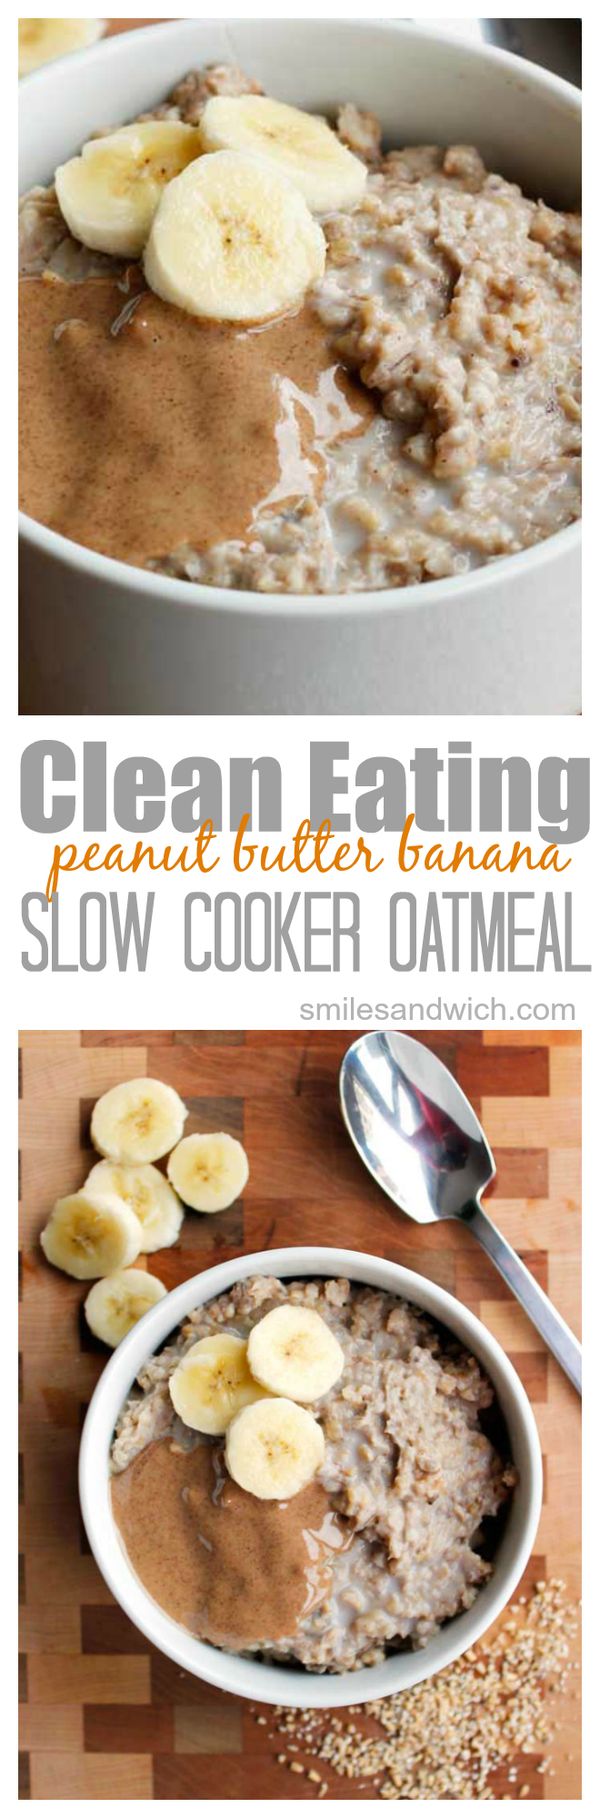 Clean Eating Peanut Butter Banana Slow Cooker Oatmeal